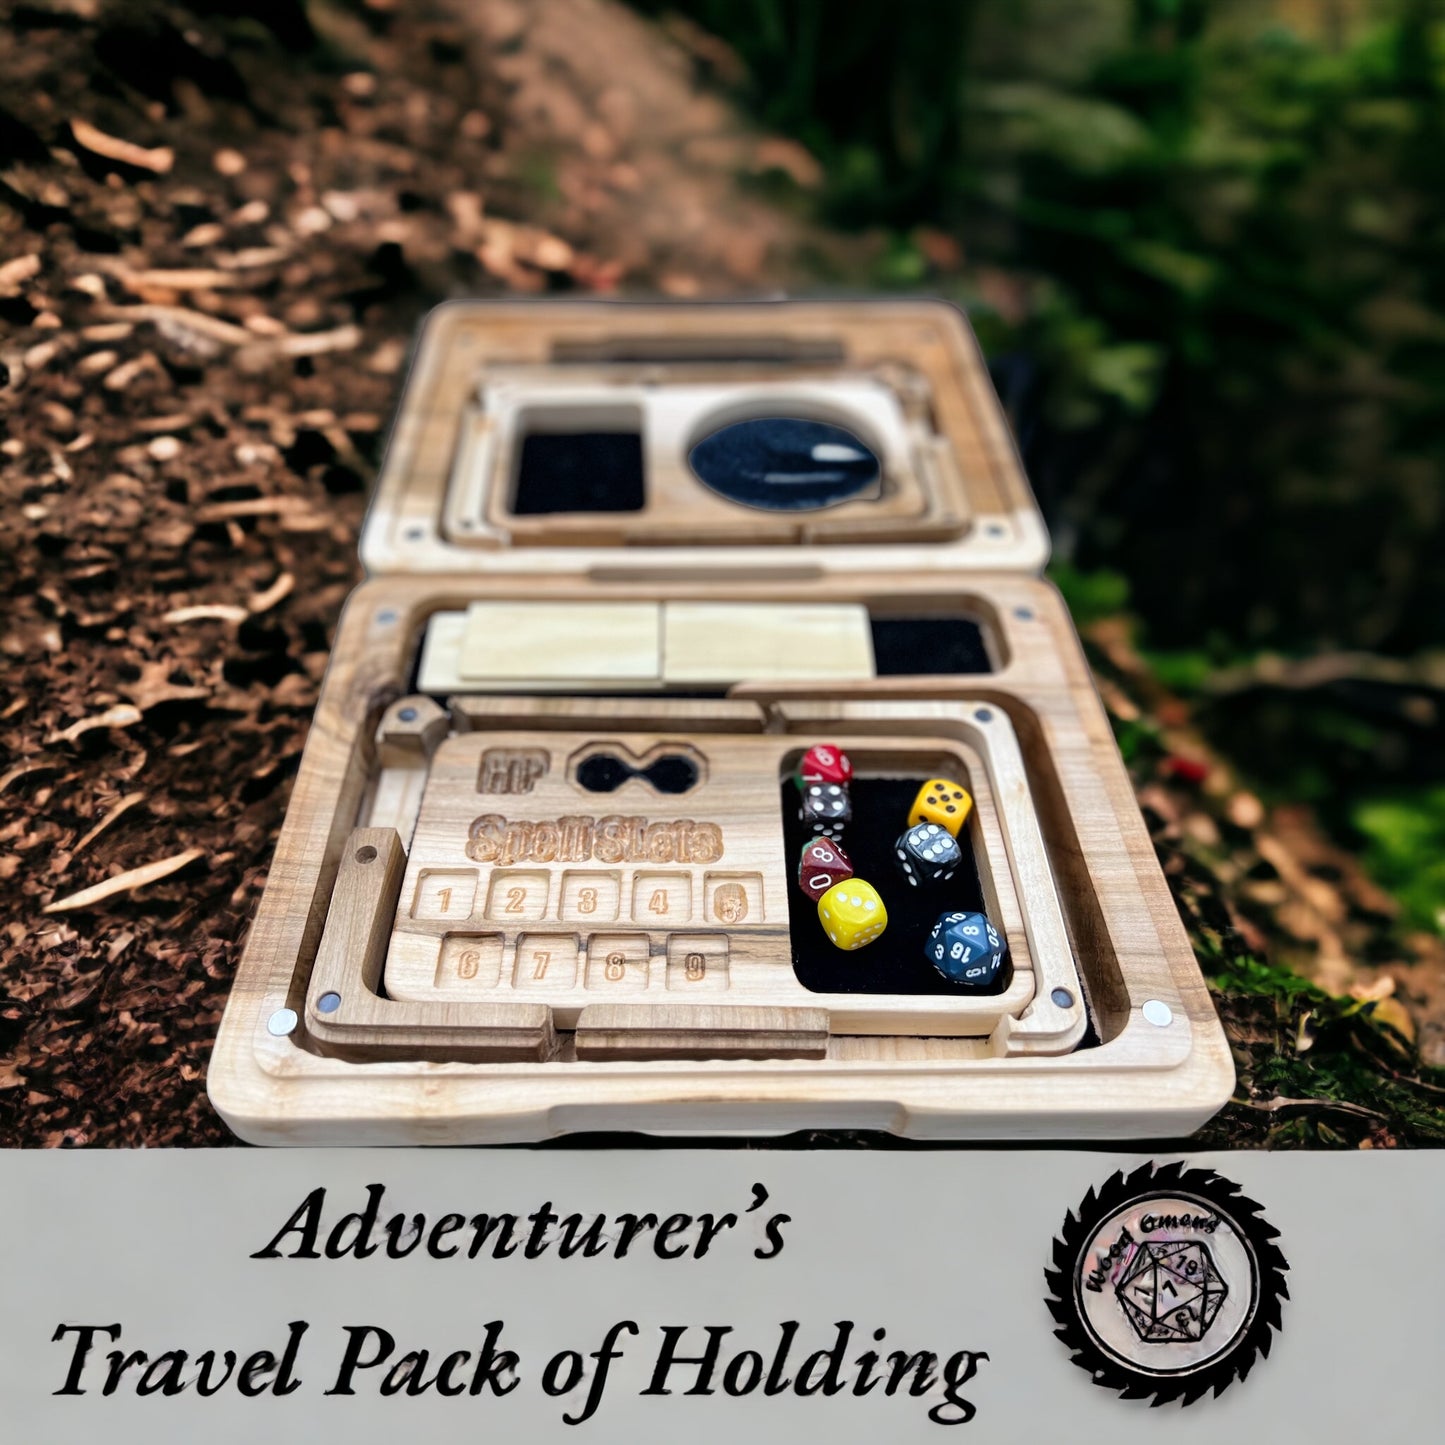 The Adventurer's Travel Pack of Holding